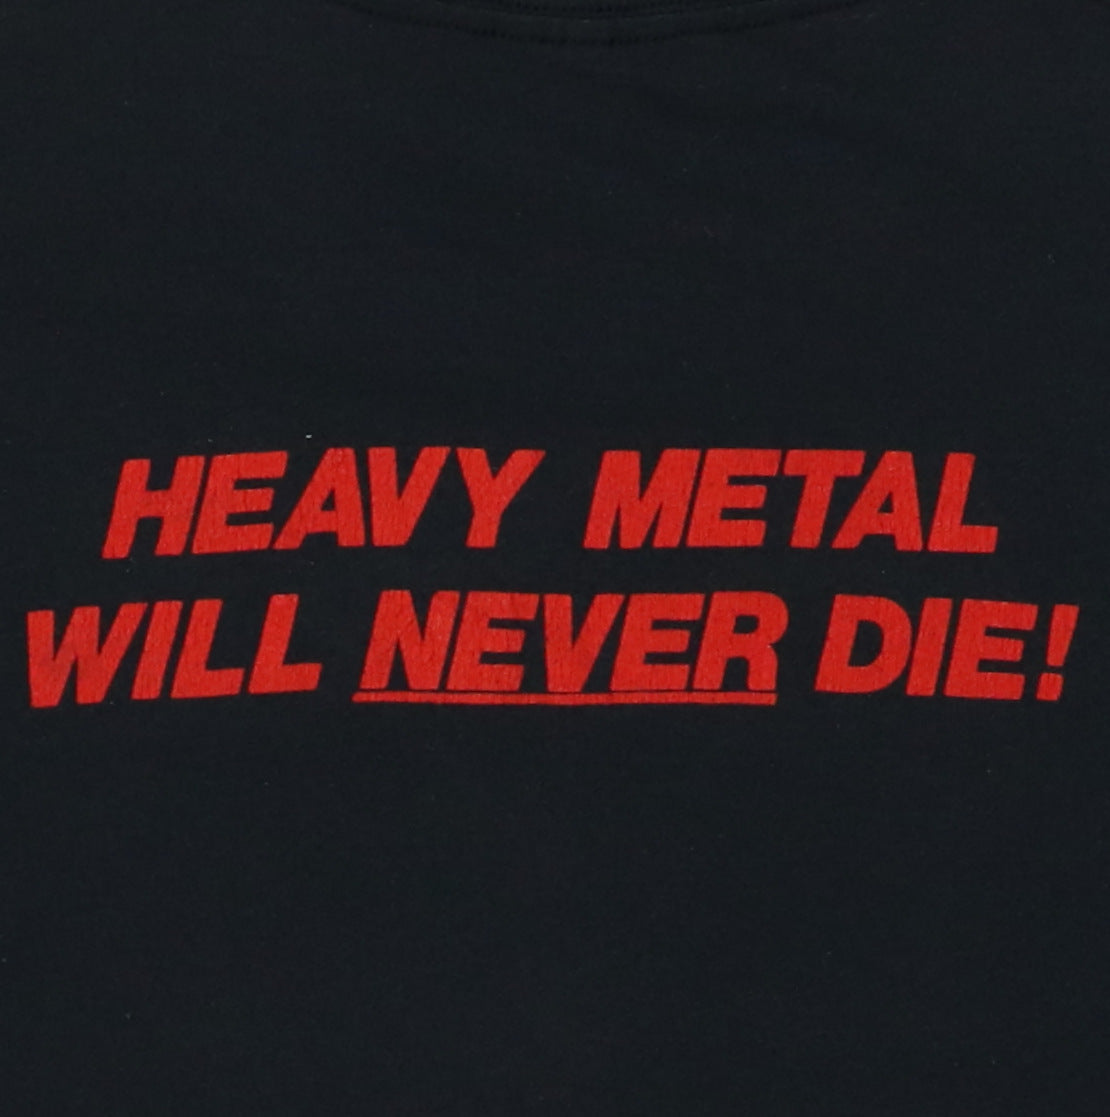 1980s Metal Blade Records Shirt